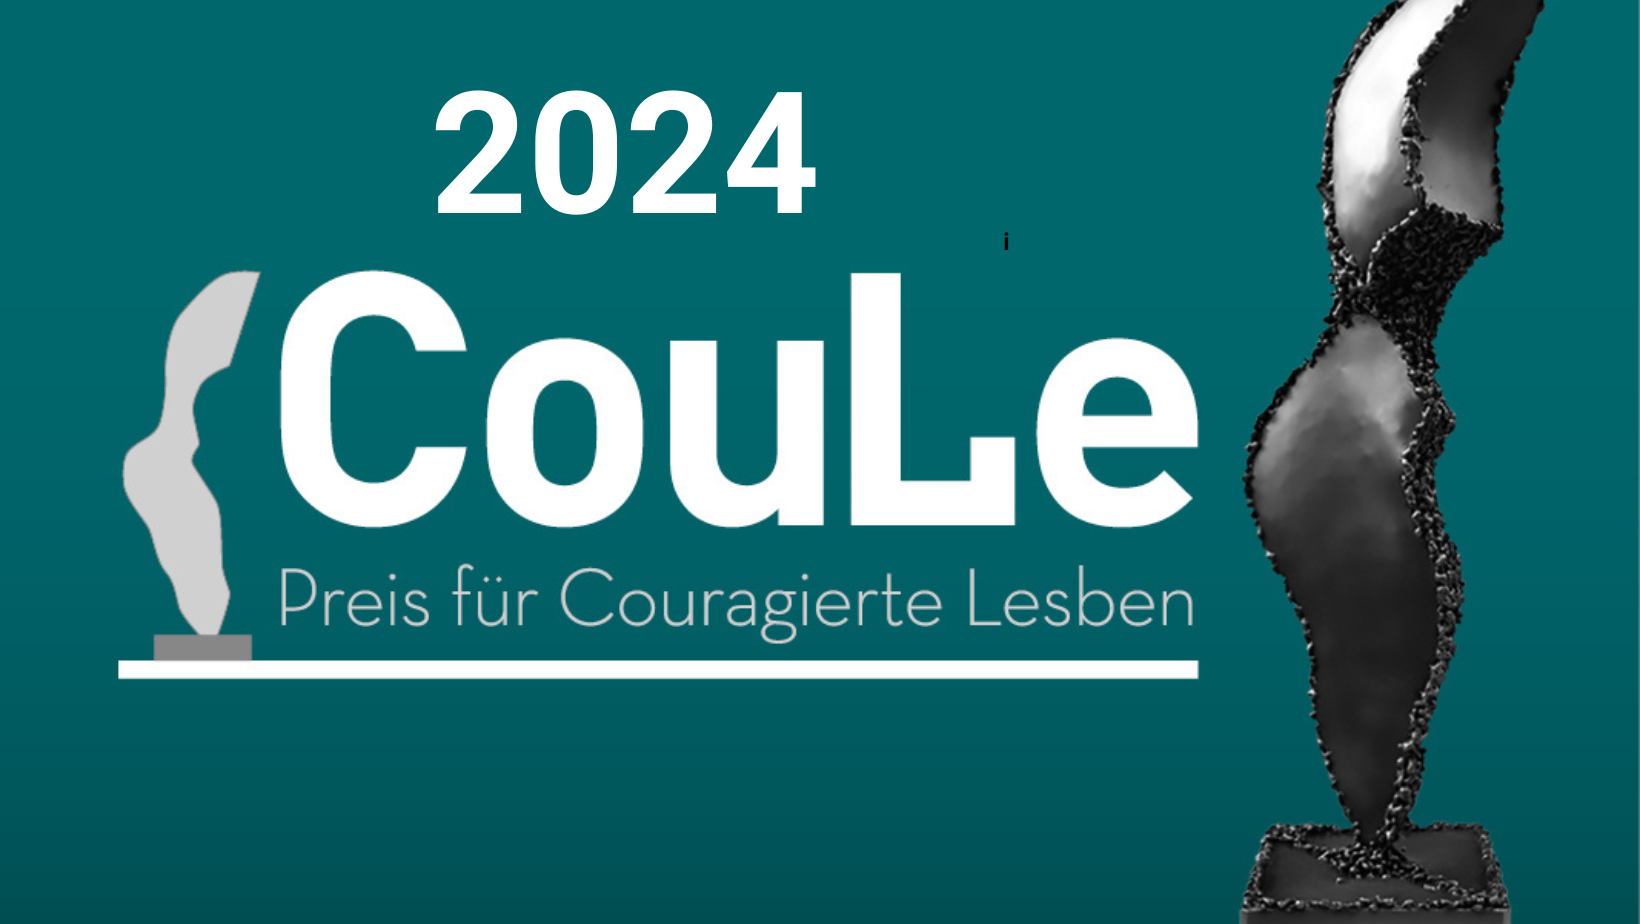 CouLe 2024 Preis für Couragierte Lesben